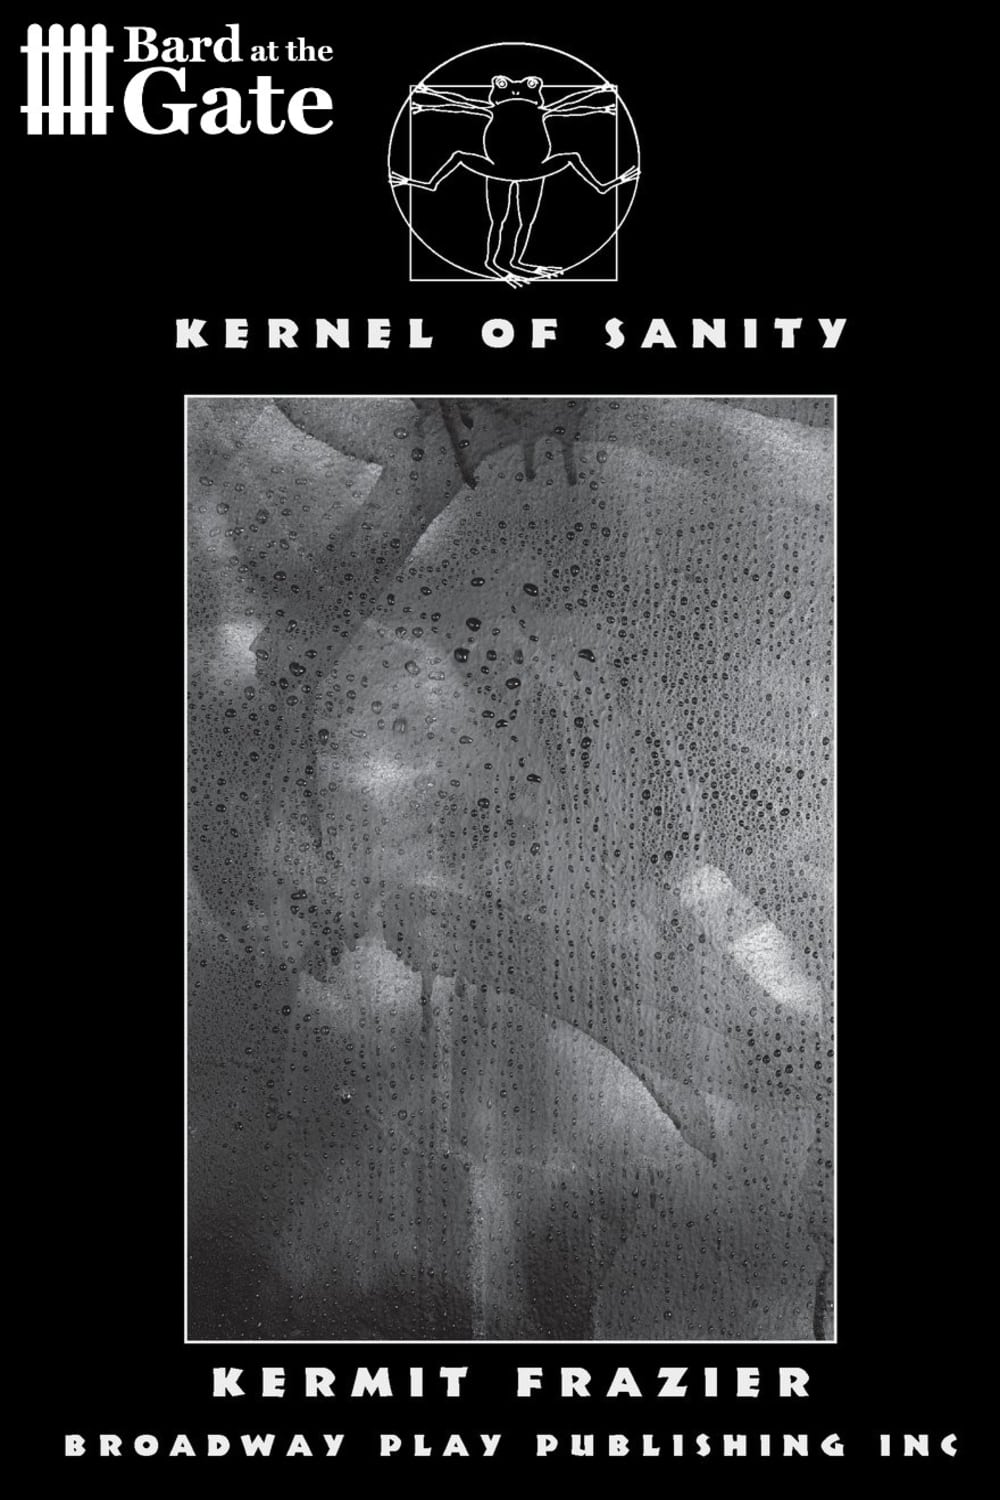 Kernel of Sanity